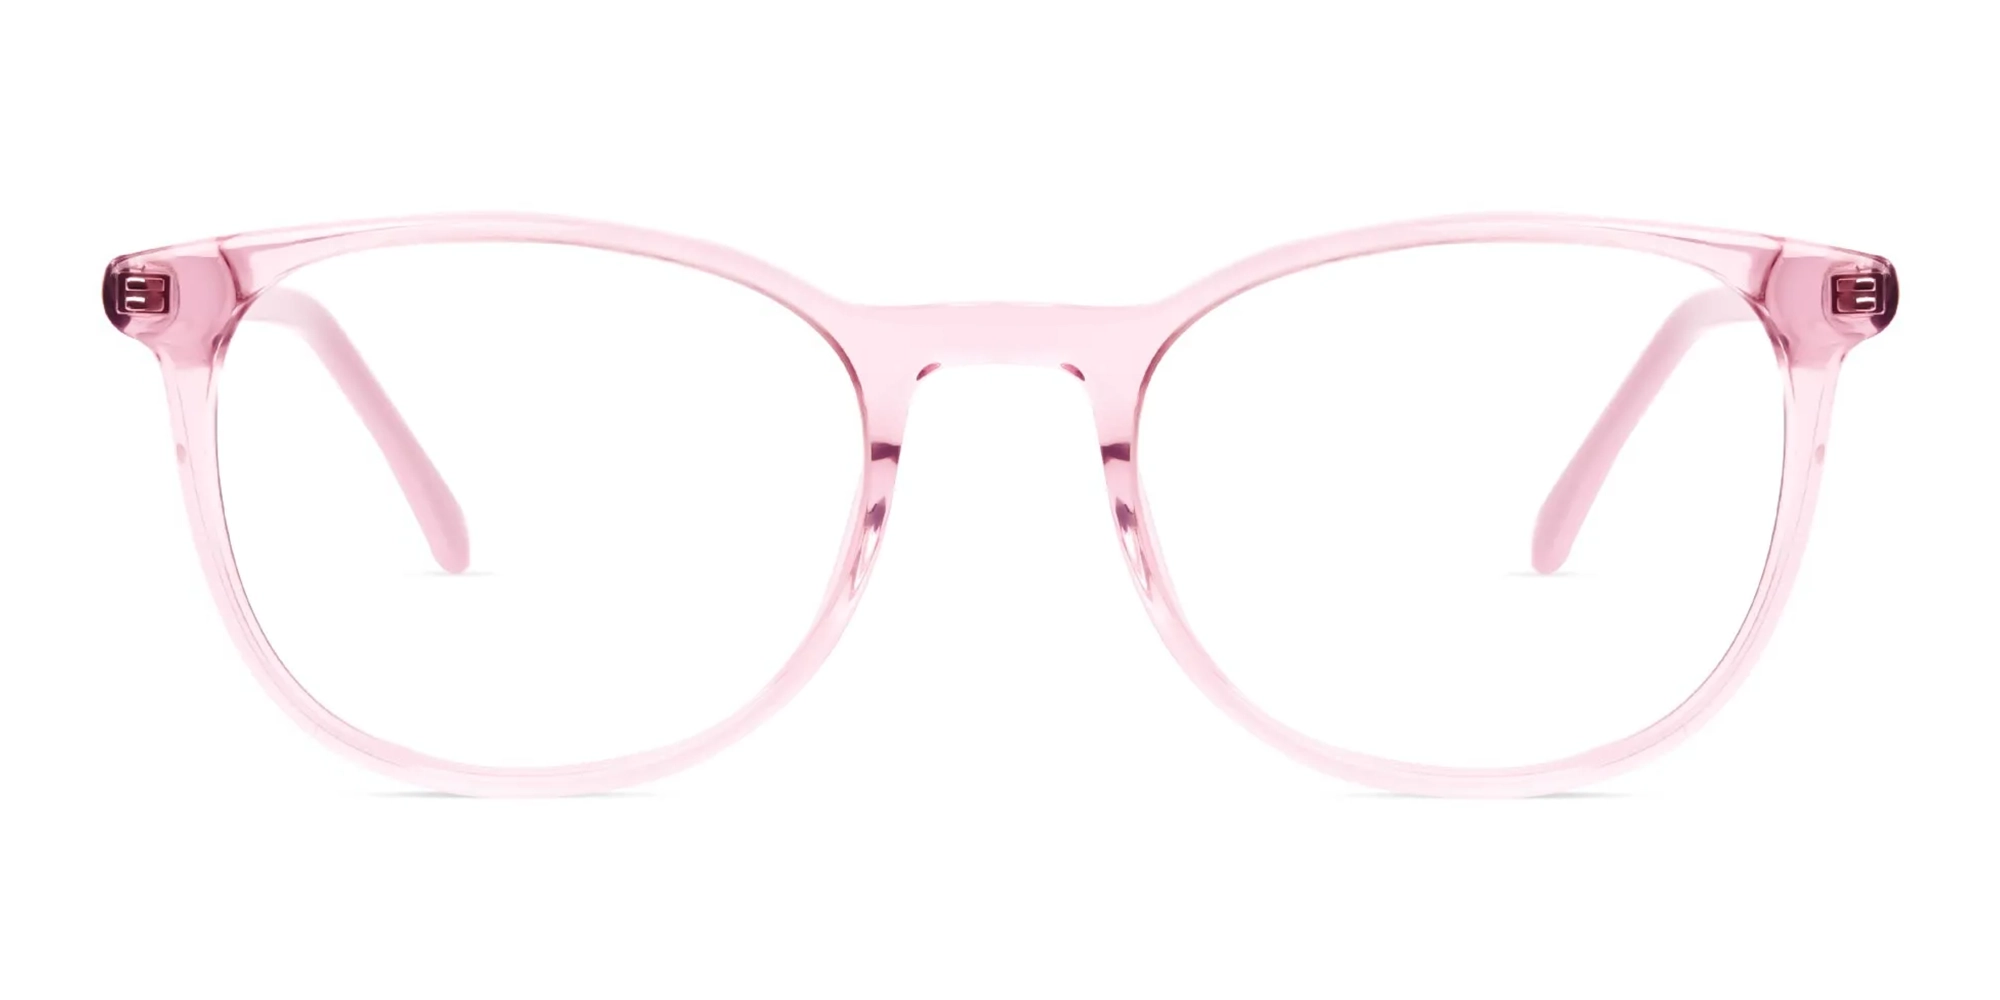 Crystal and transparent blossom Pink Round Glasses Frames-2